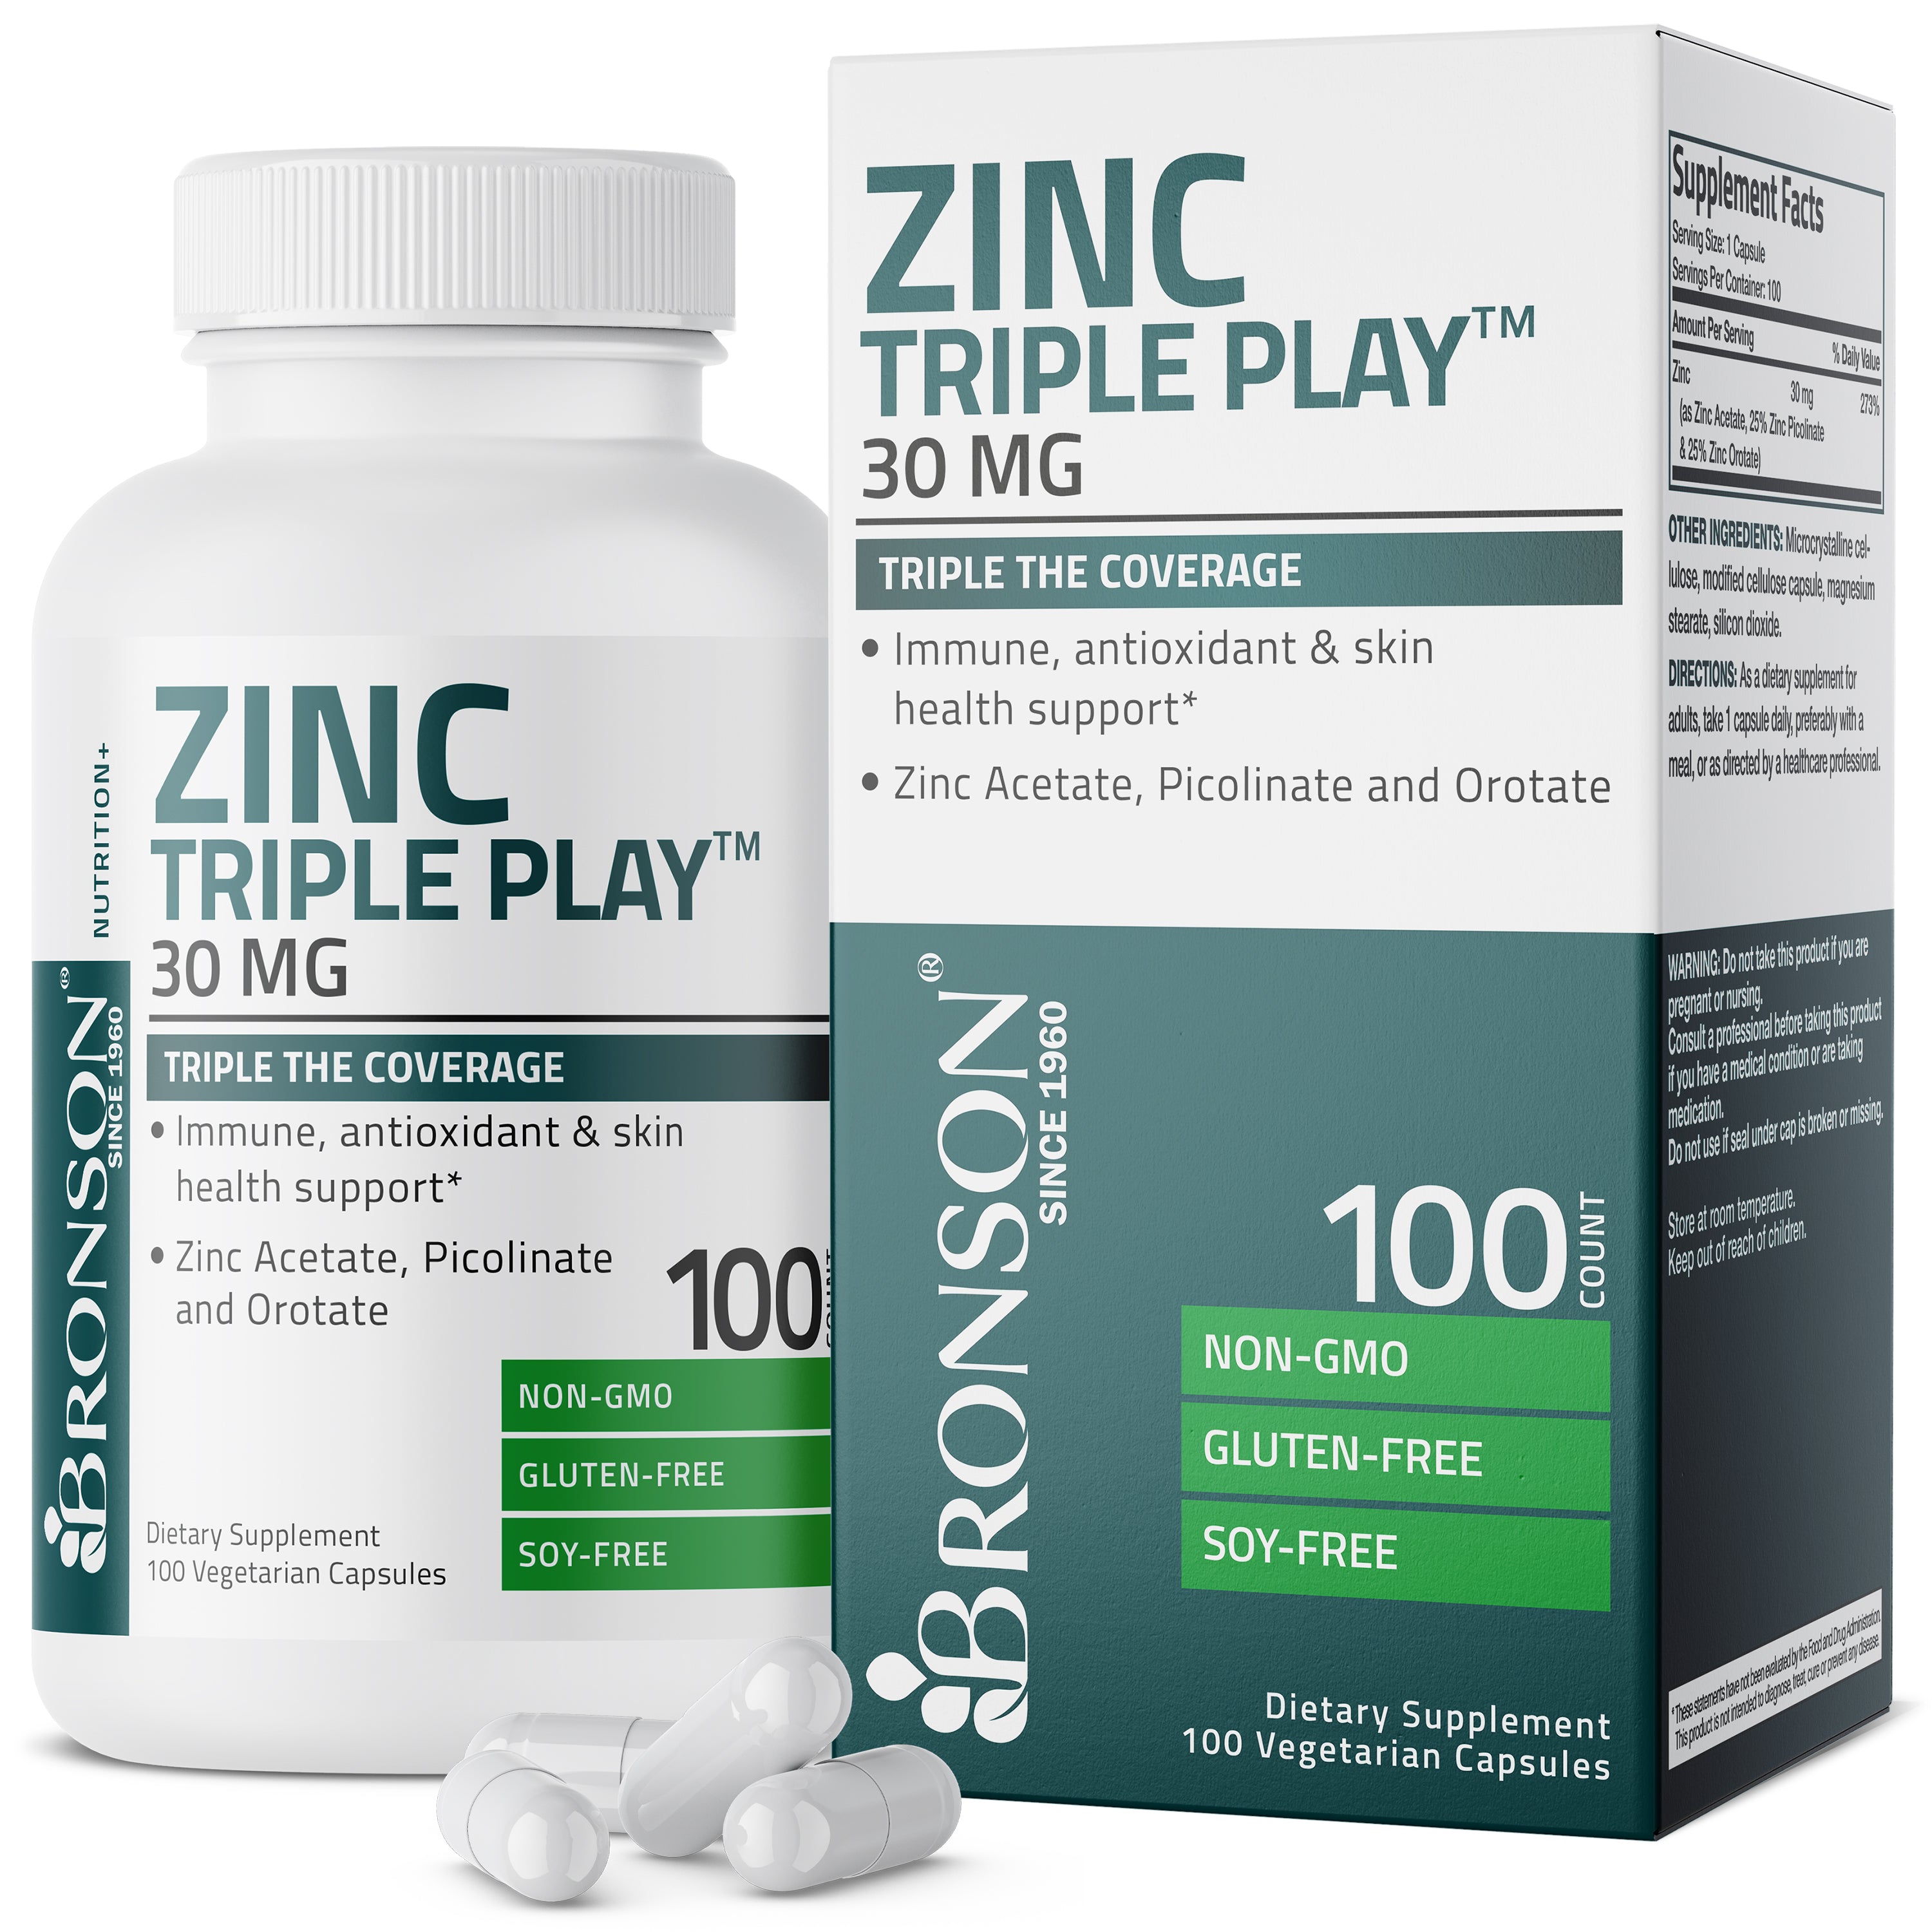 Zinc Triple Play - 30 mg view 8 of 7